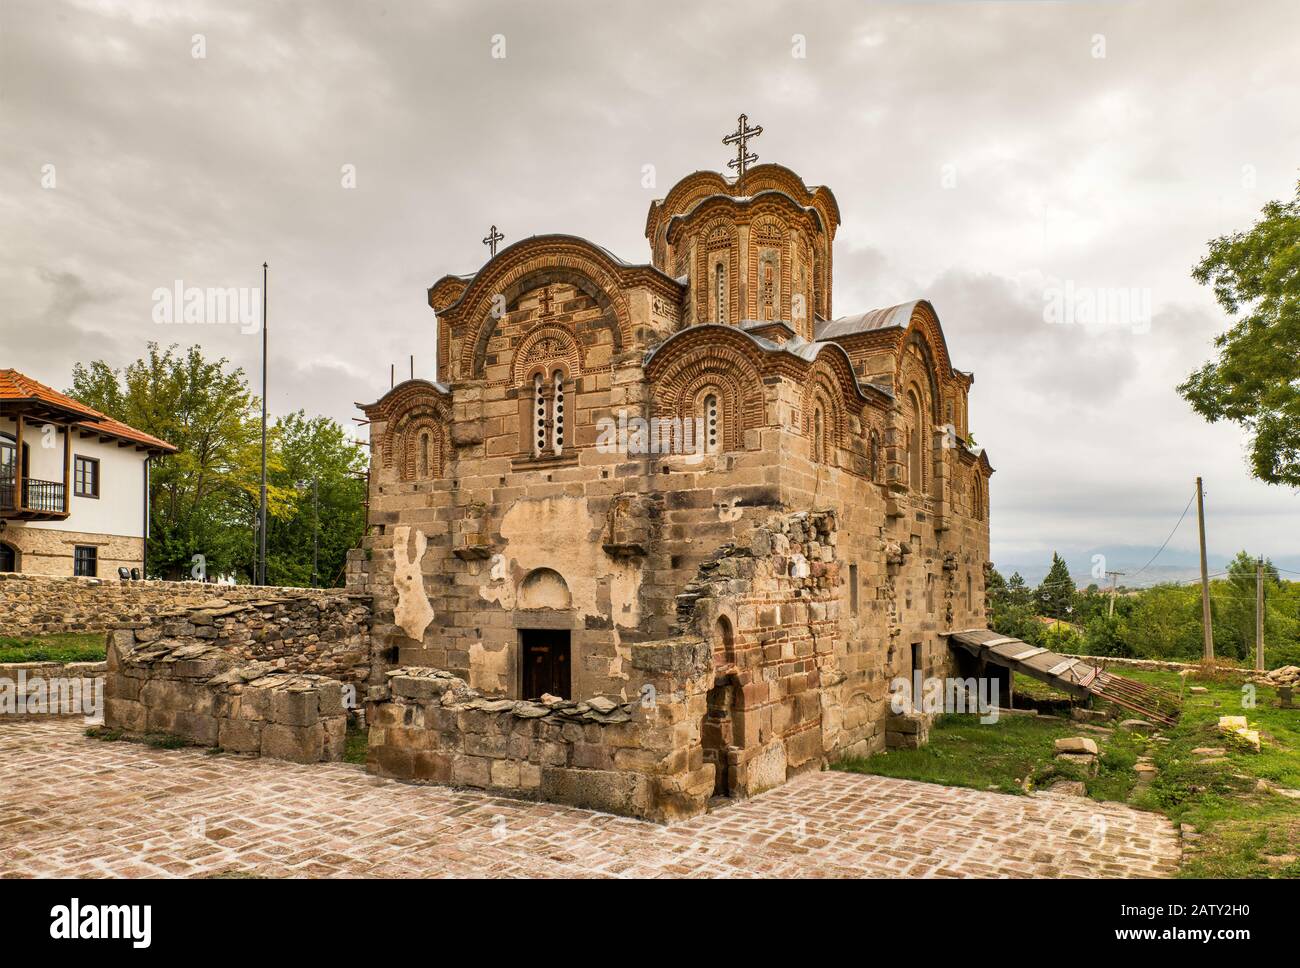 Church of St George, Macedonian Orthodox church, built in 1318, Serbo-Byzantine style, in village of Staro Nagoricane, near Kumanovo, North Macedonia Stock Photo